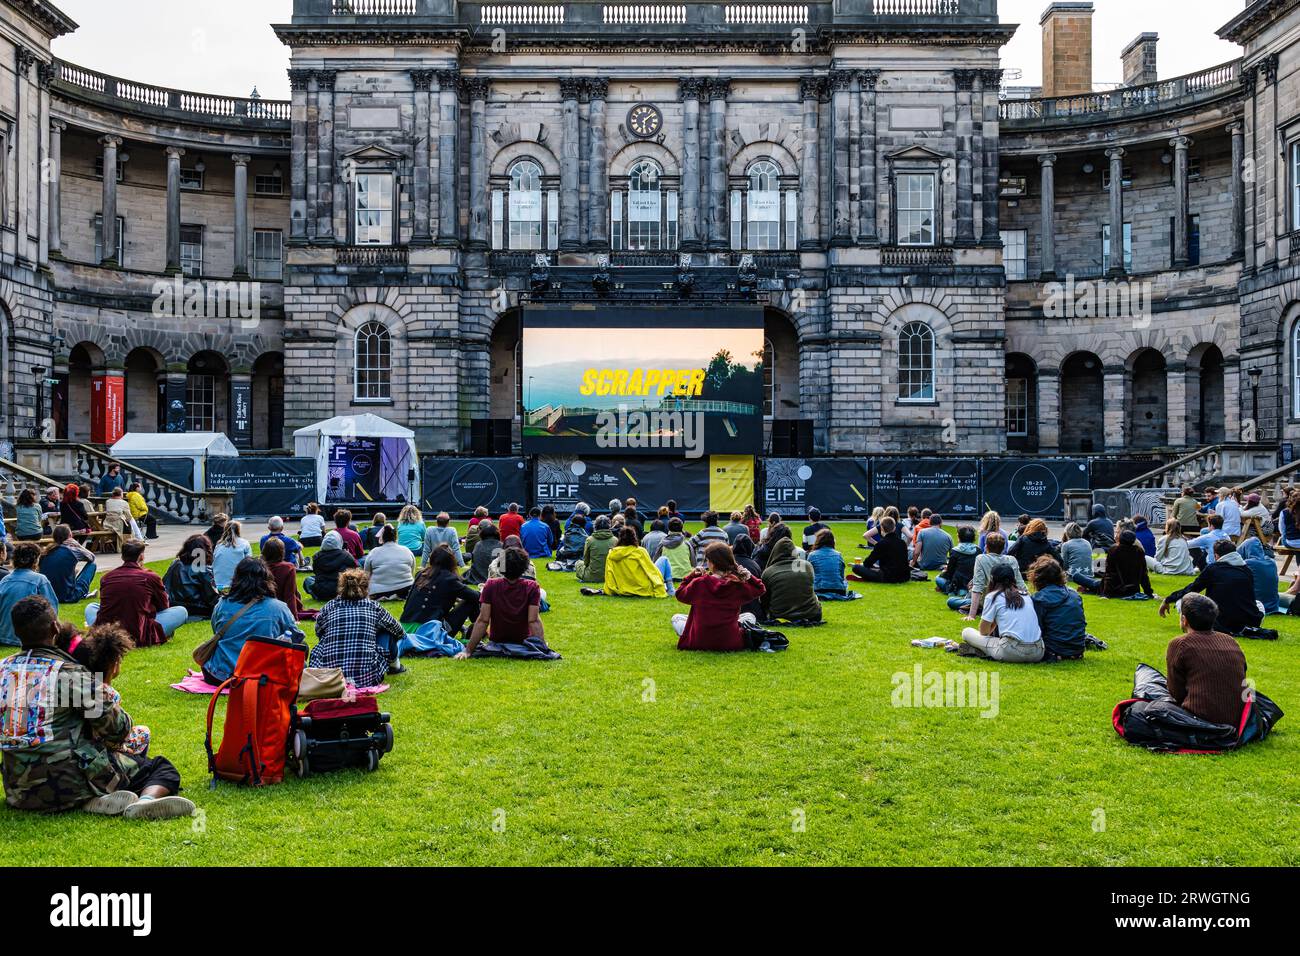 People sitting on grass to watch outdoor screening of film Scrapper, Old College Quad at Edinburgh International Film Festival, Scotland, UK Stock Photo